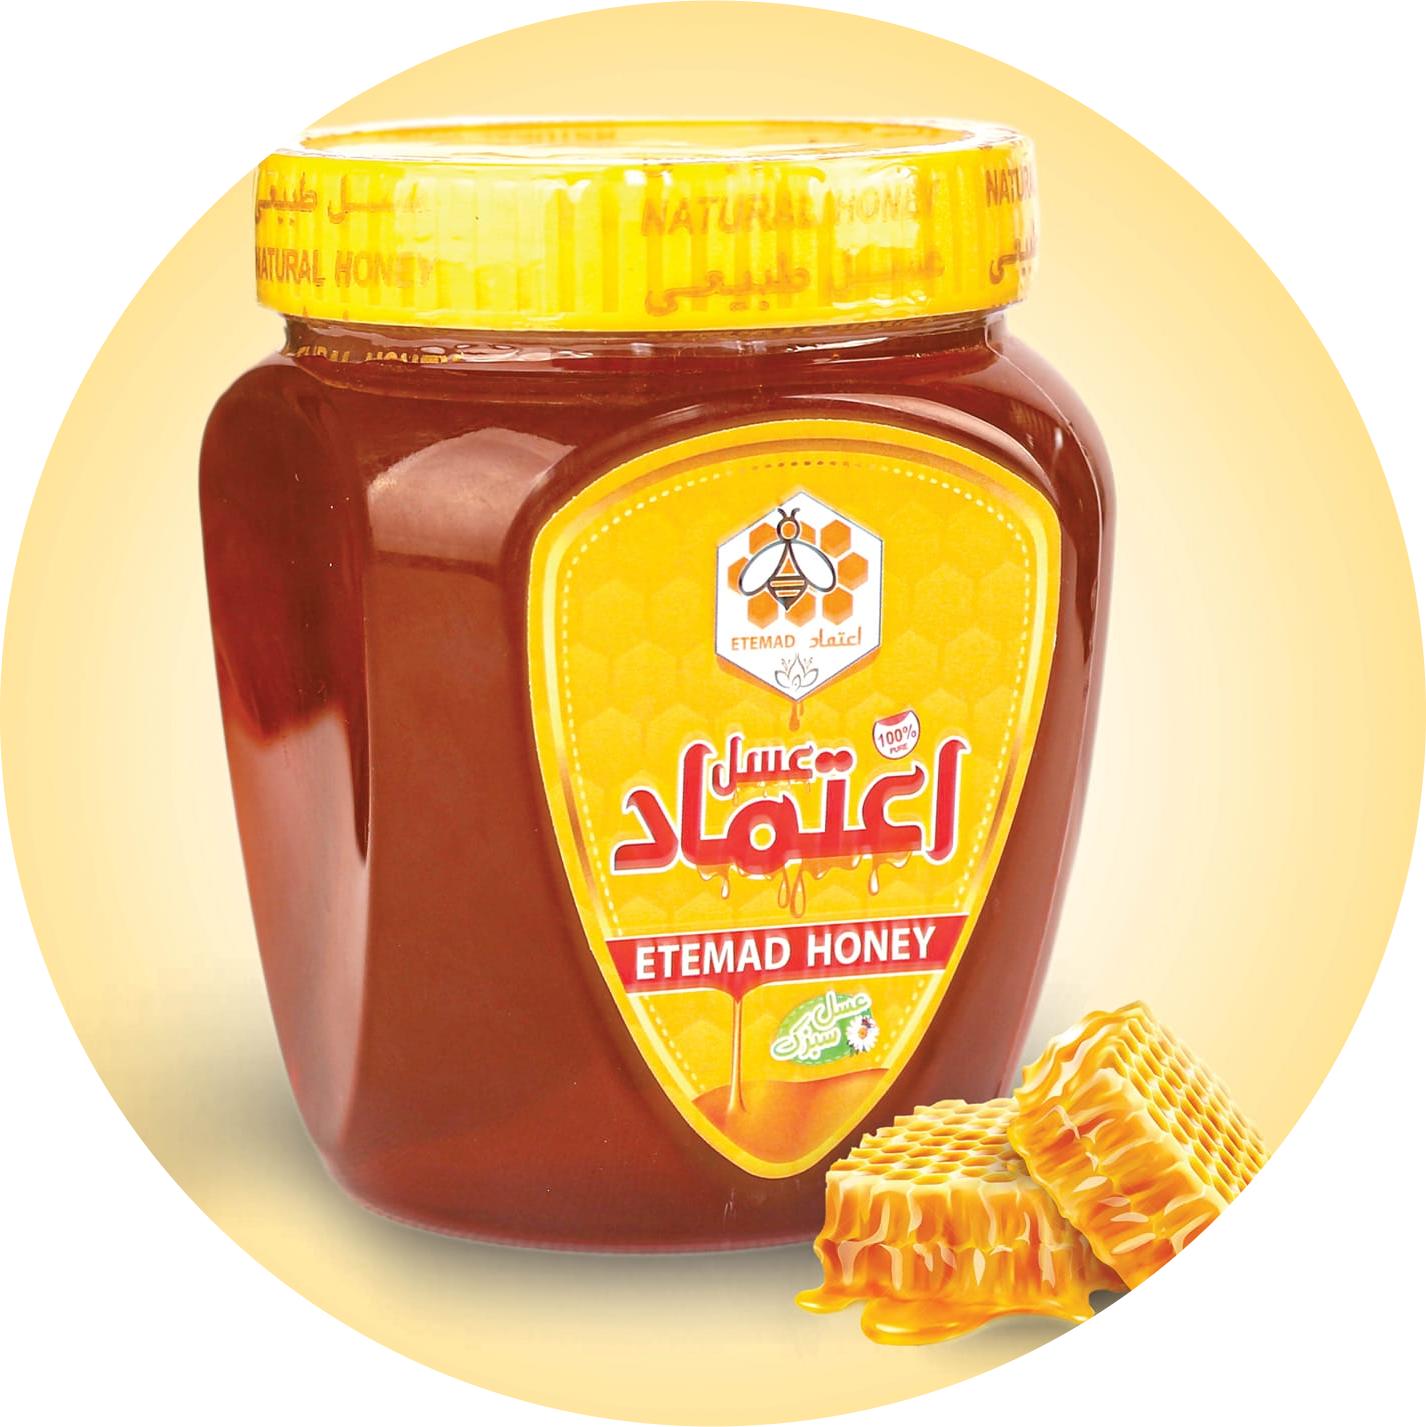 Etemad Honey Company